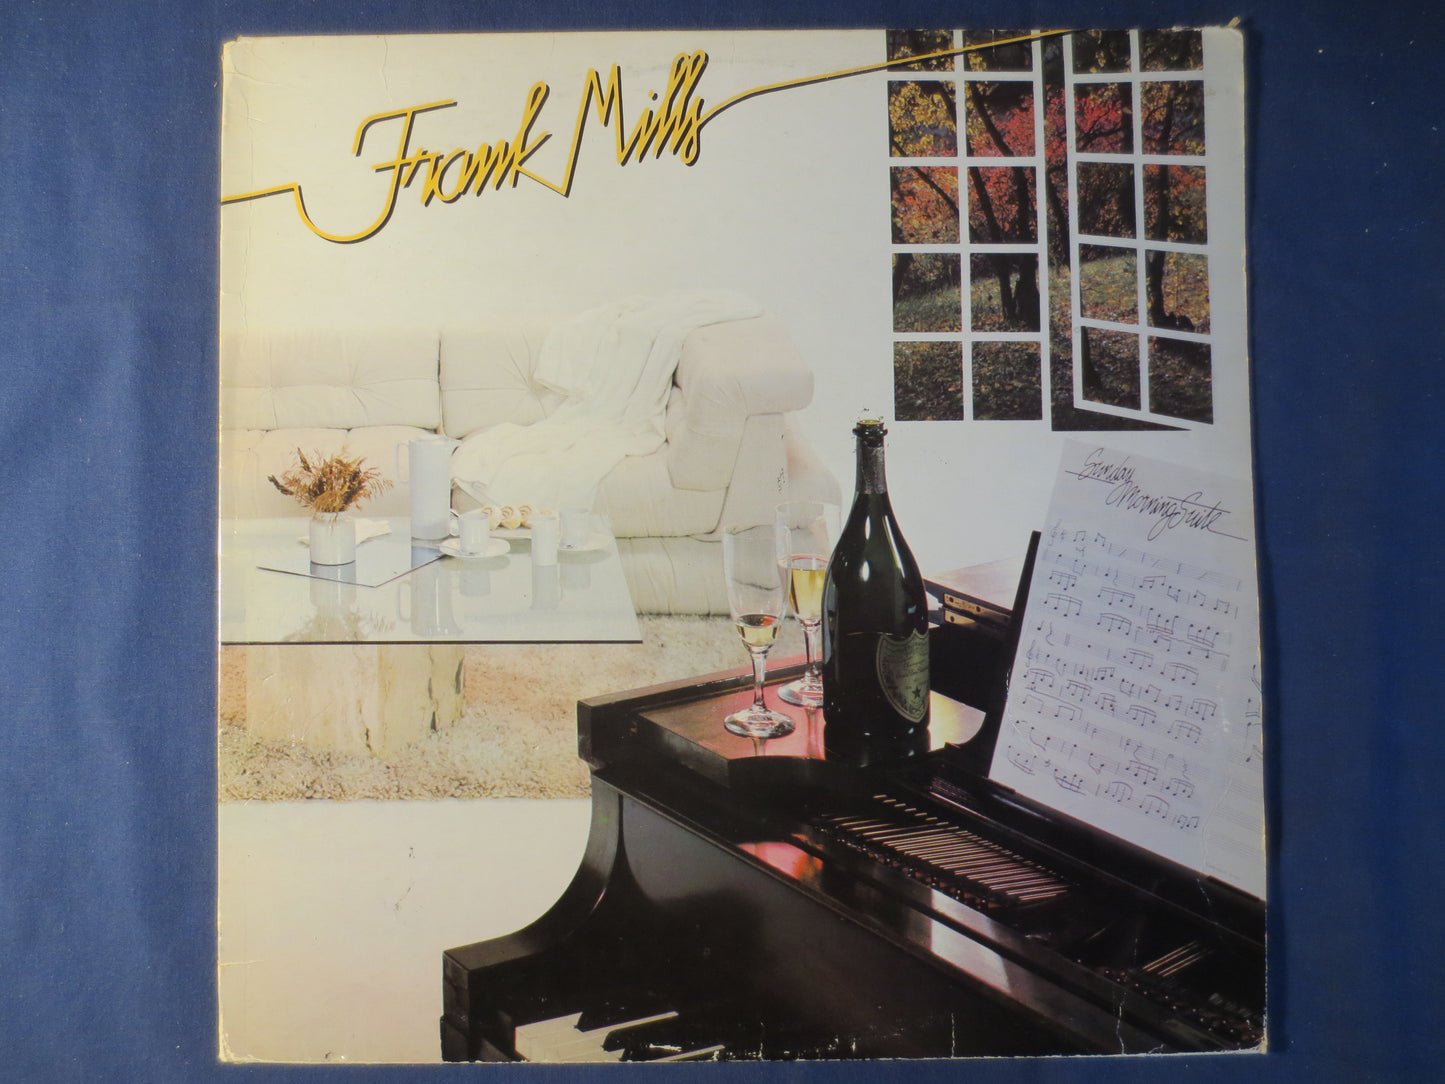 FRANK MILLS, Sunday MORNING Suite, Jazz Record, Vintage Vinyl, Record Vinyl, Record, Vinyl Record, Vinyl Album, 1979 Records